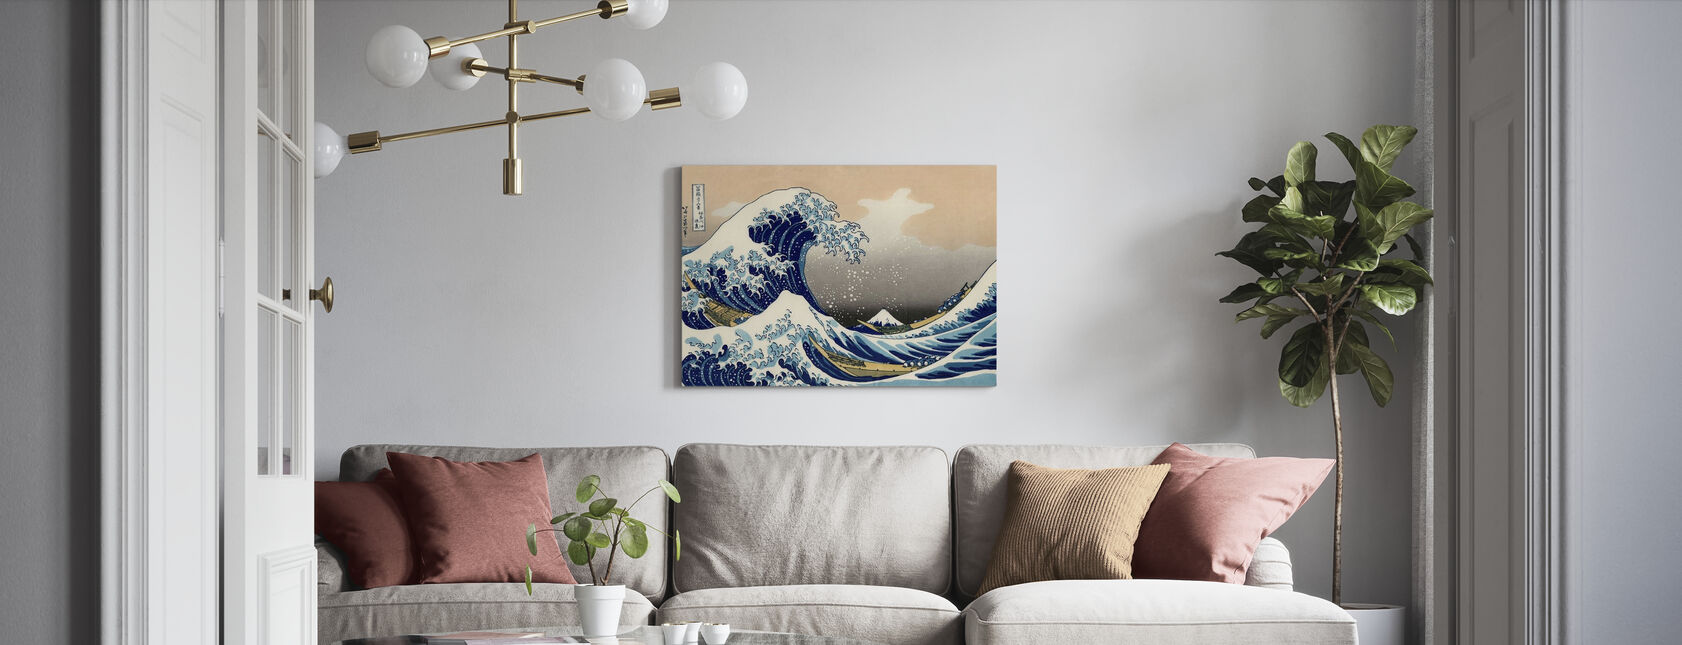 Great Wave, Katsushika Hokusai - Canvas print - Living Room